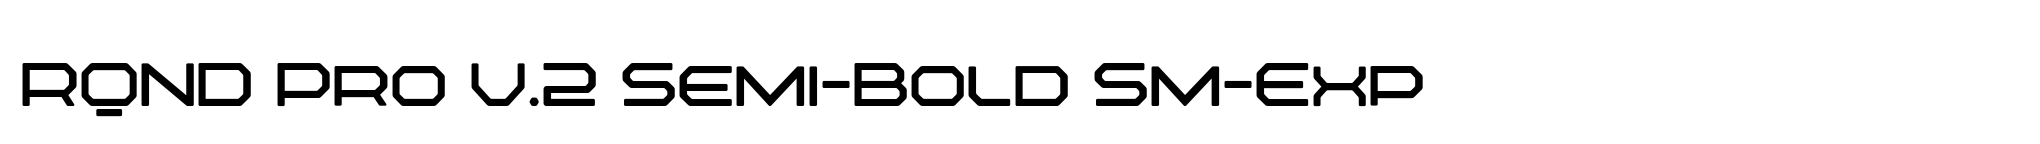 RQND Pro V.2 Semi-Bold Sm-Exp image